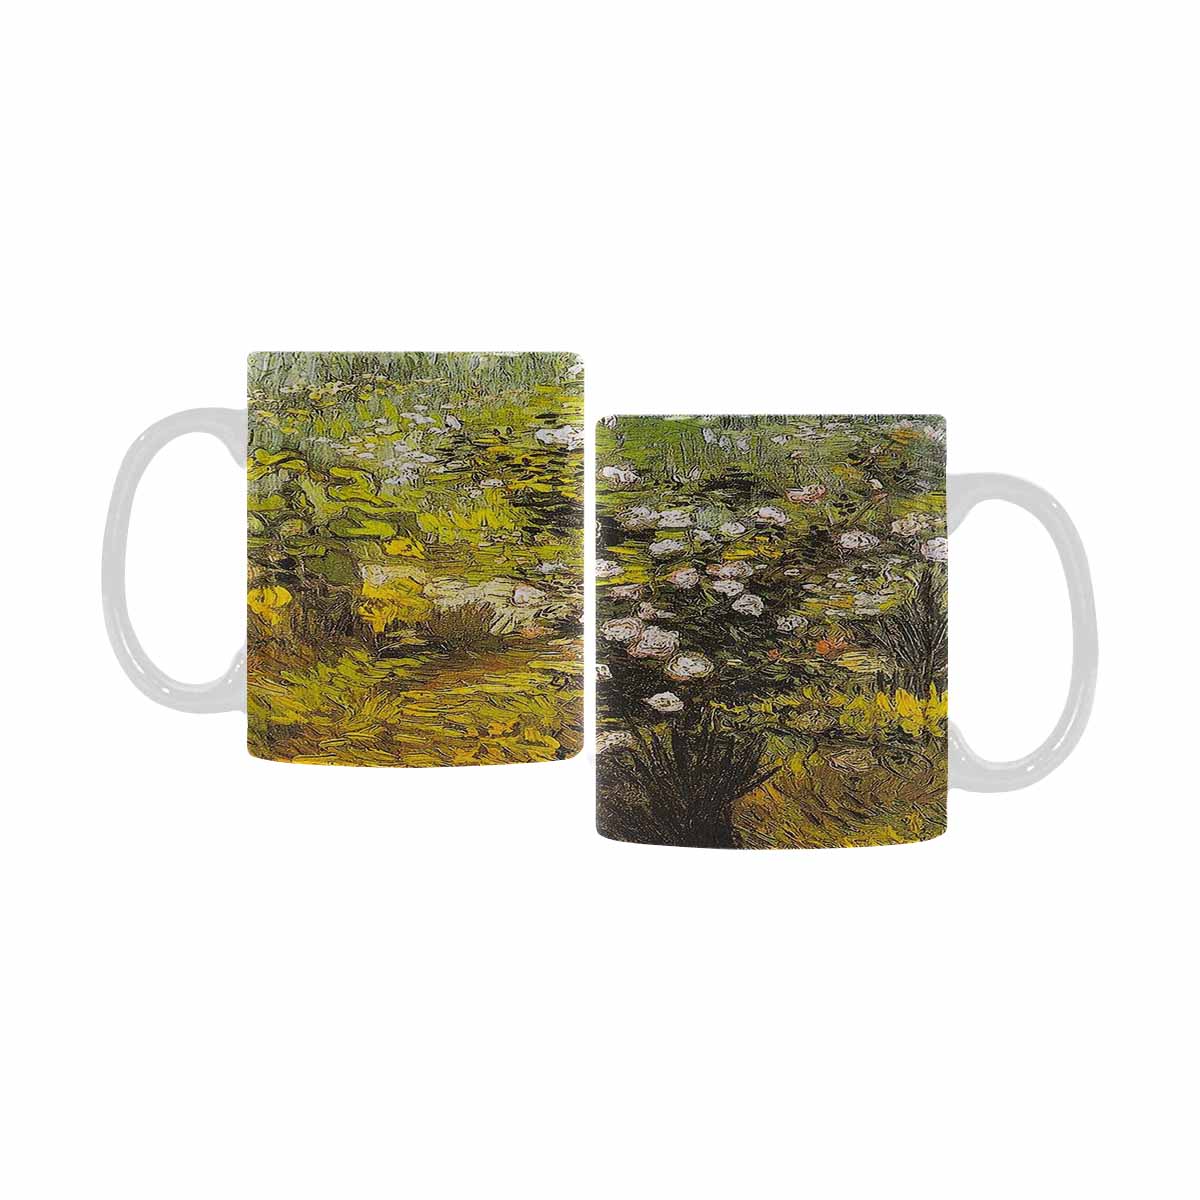 Vintage floral coffee mug or tea cup, Design 05